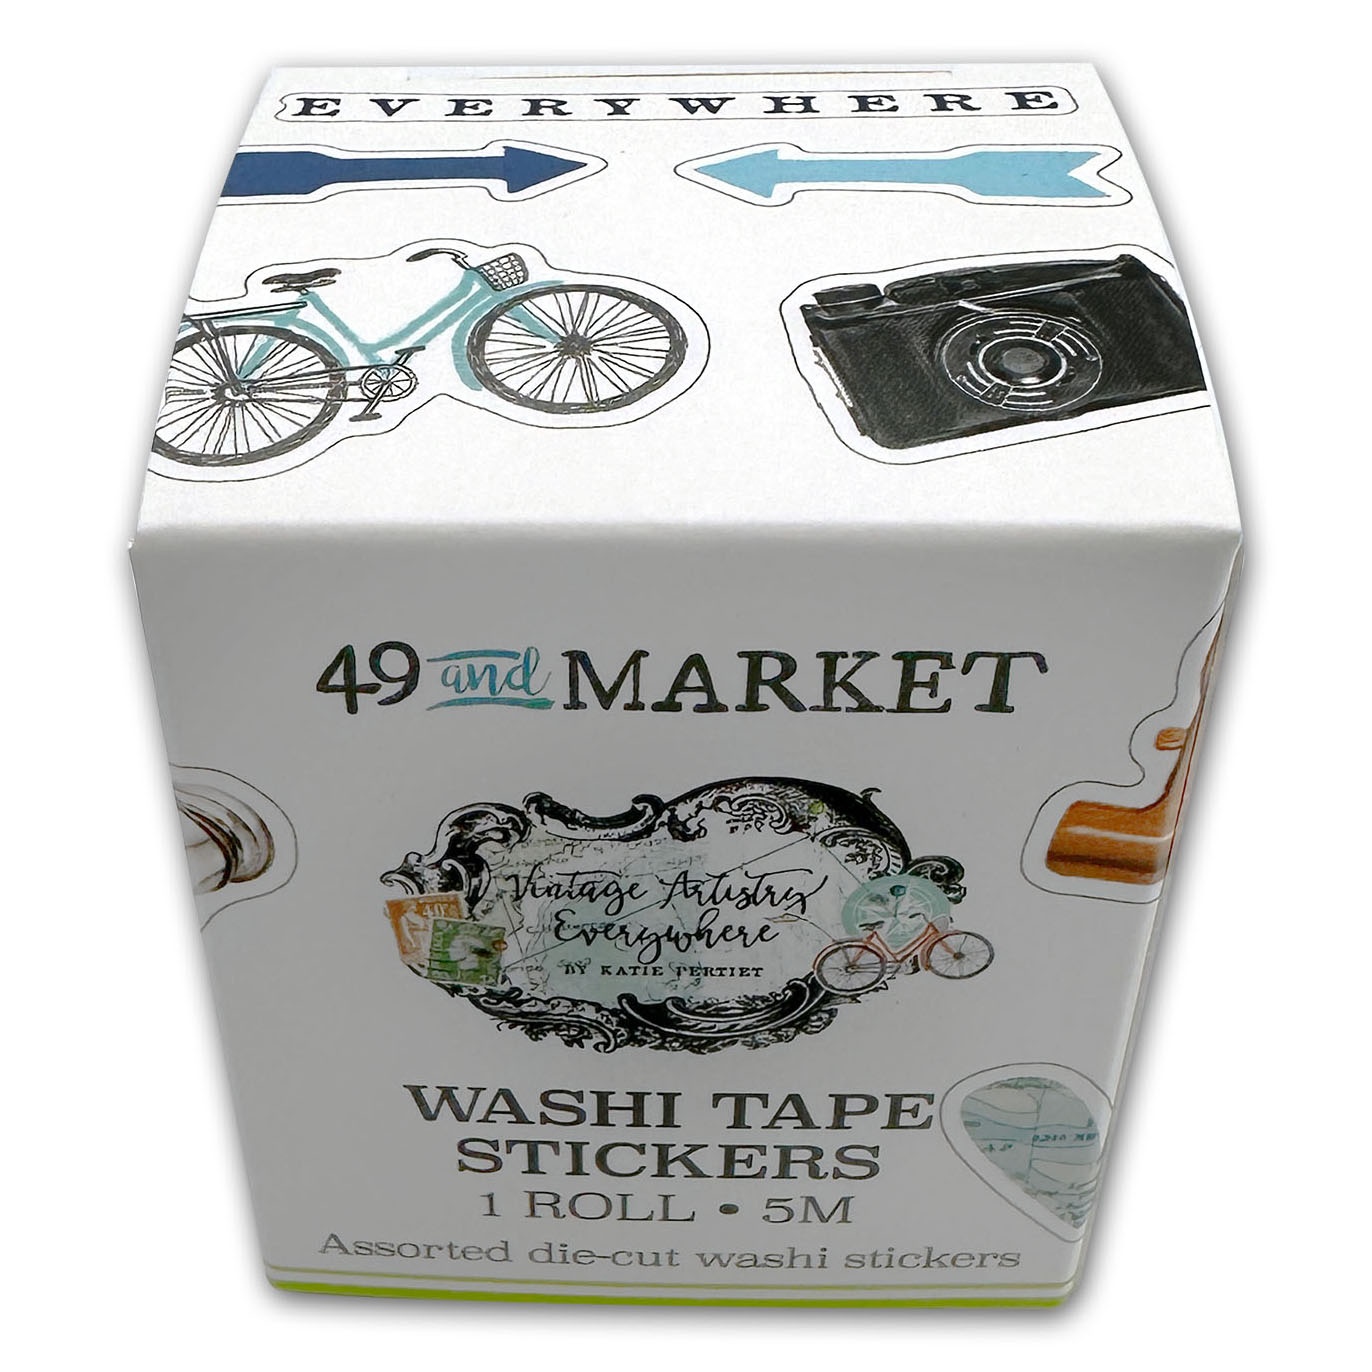 49&Market - Vintage Artistry - Washi Sticker Roll - Everywhere (VAE40827)